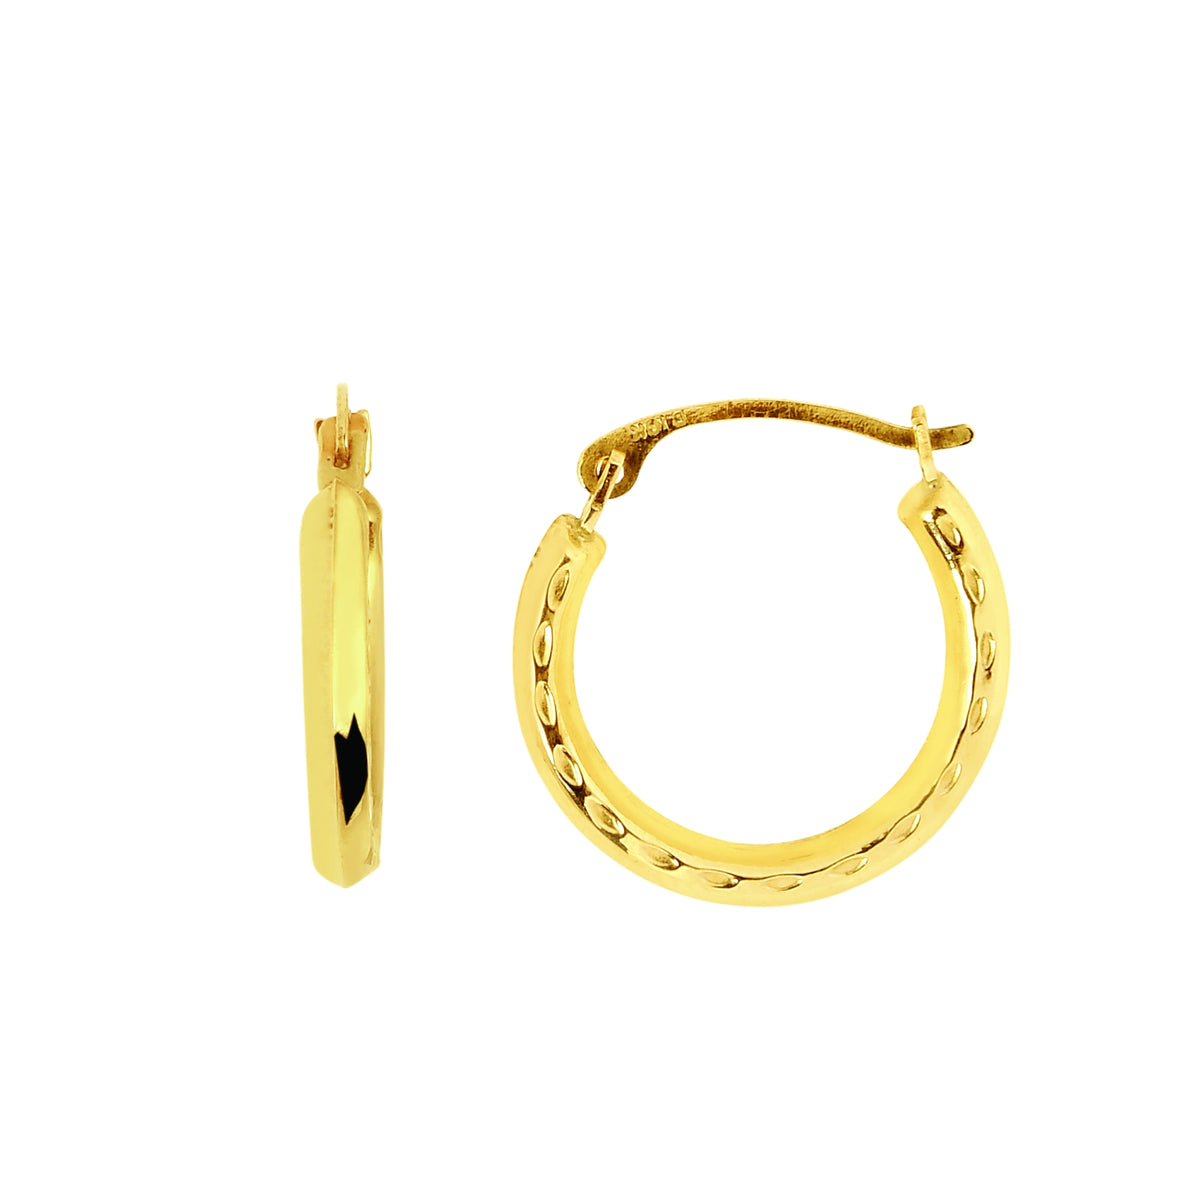 14K Yellow Gold Horseshoe Hoop Earrings, Diameter 15mm